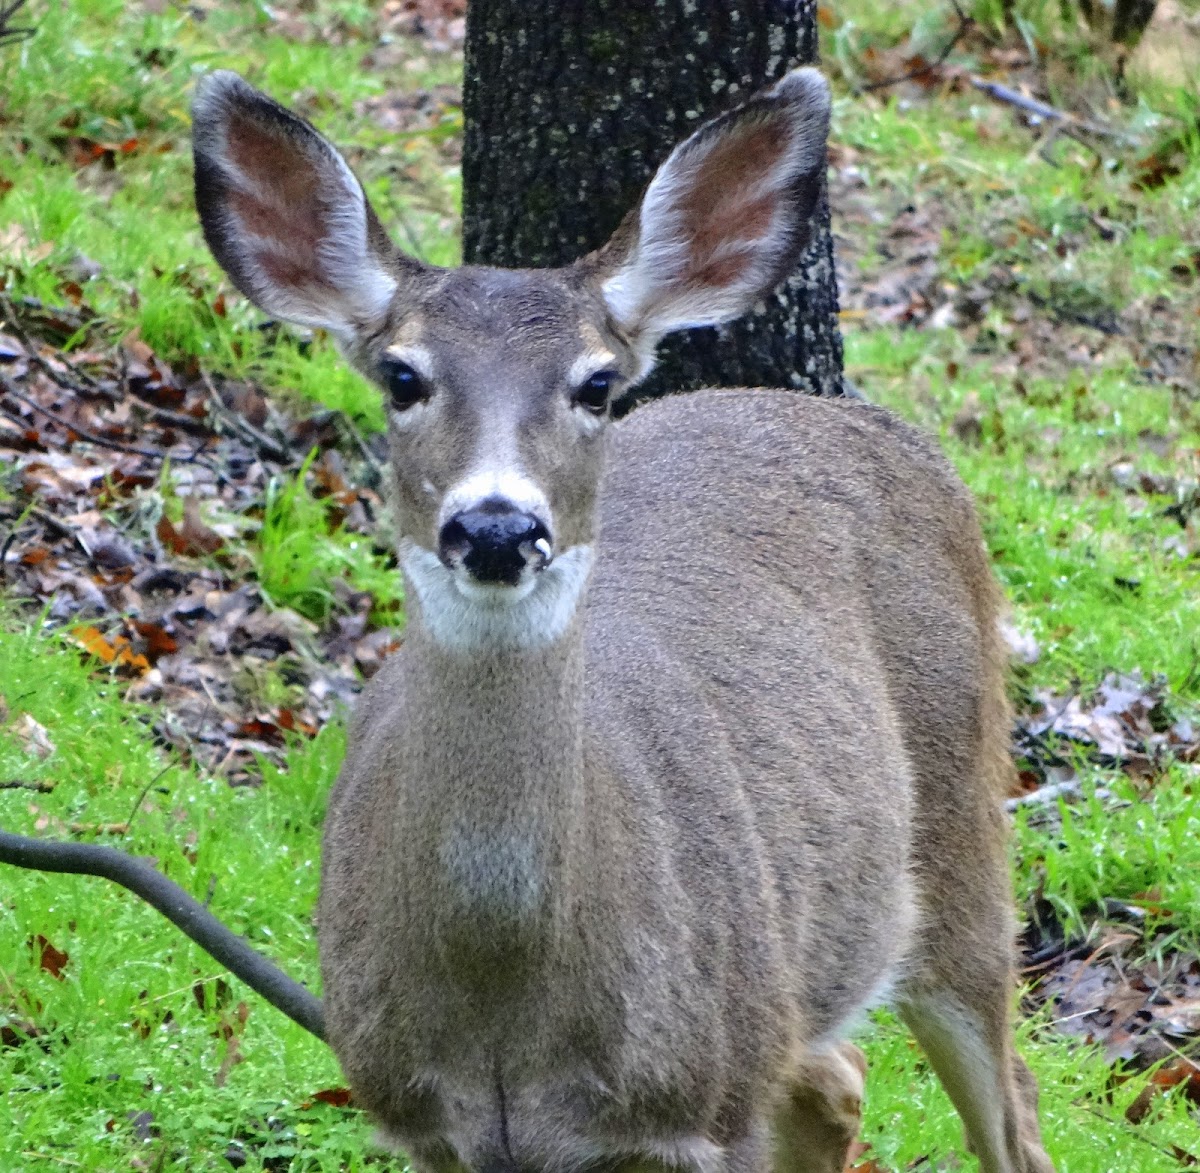 Columbian black-tailed deer